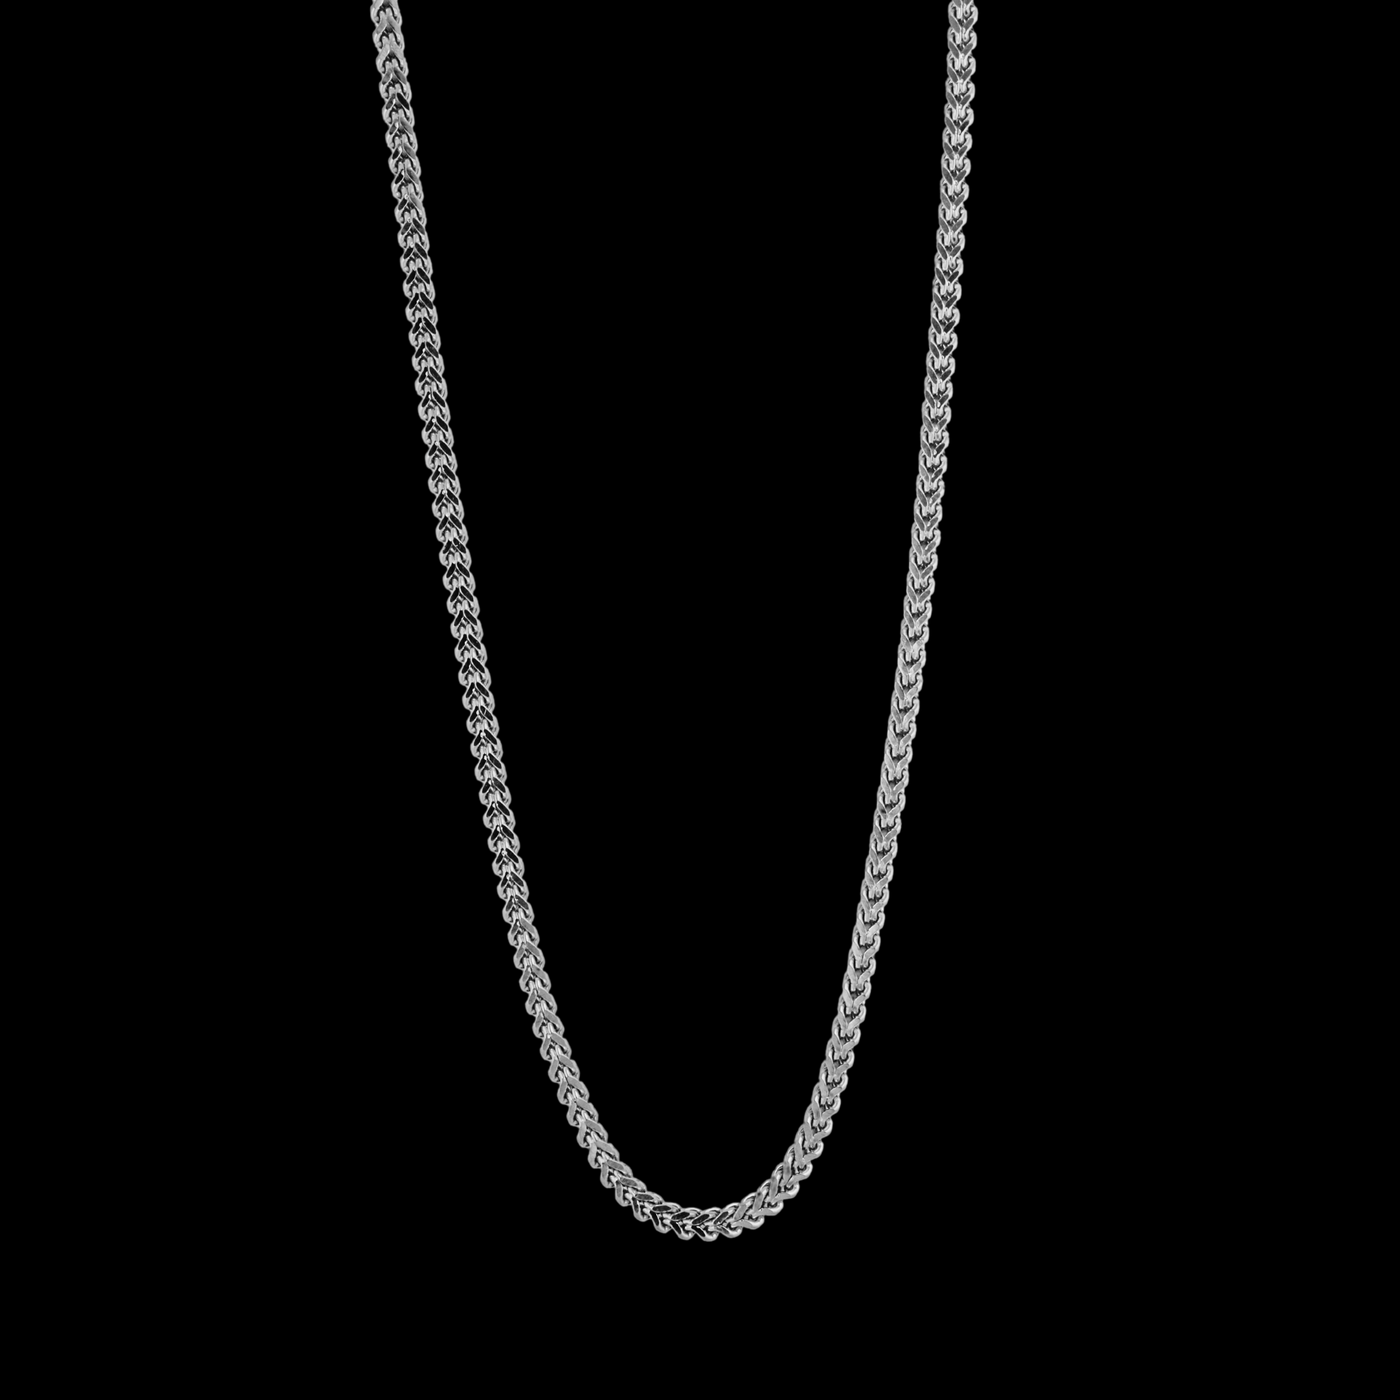 Franco necklace (3 mm)